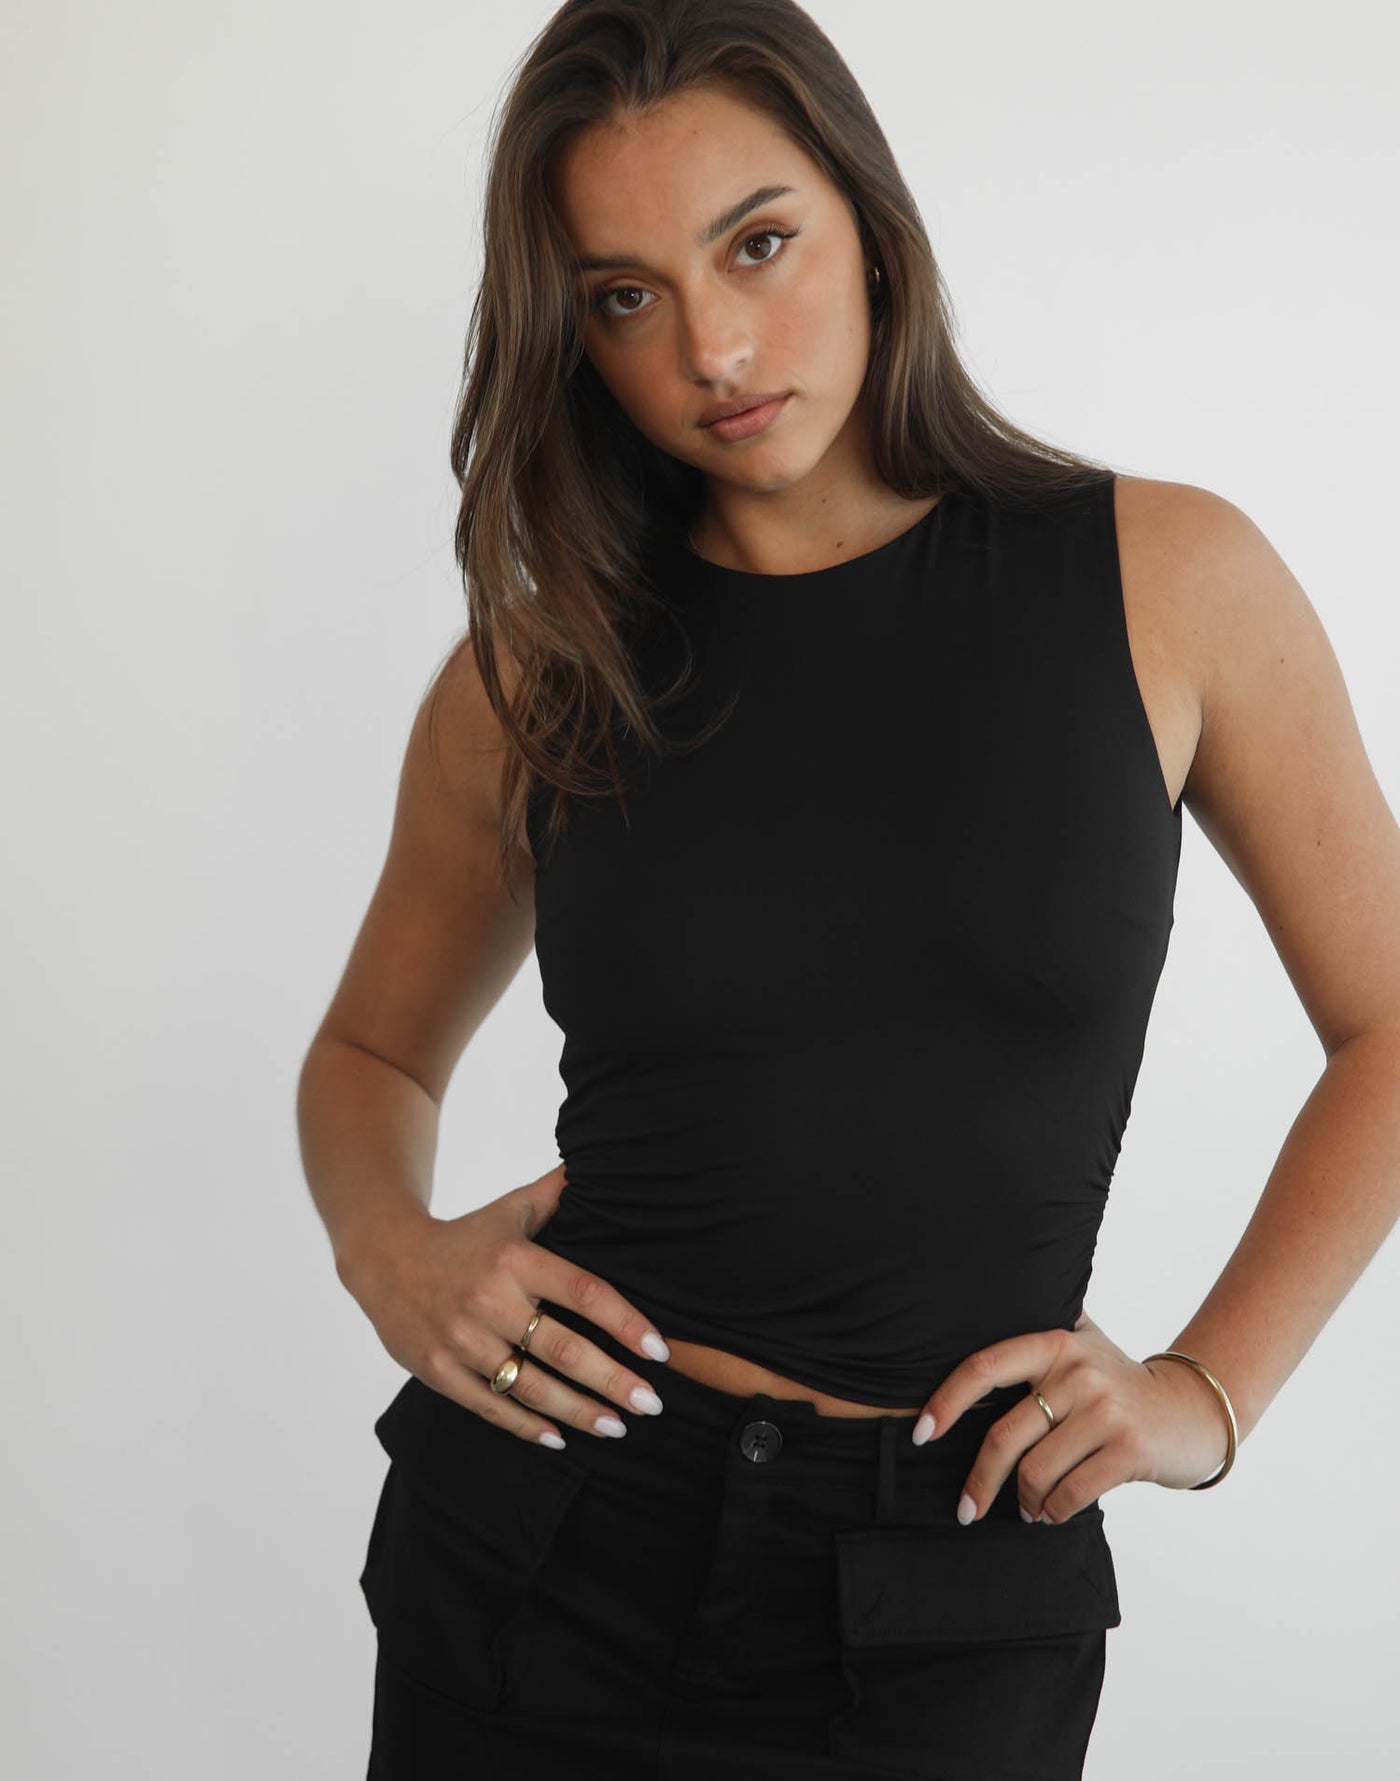 Daniela Top (Black) - Black Backless Top - Women's Top - Charcoal Clothing